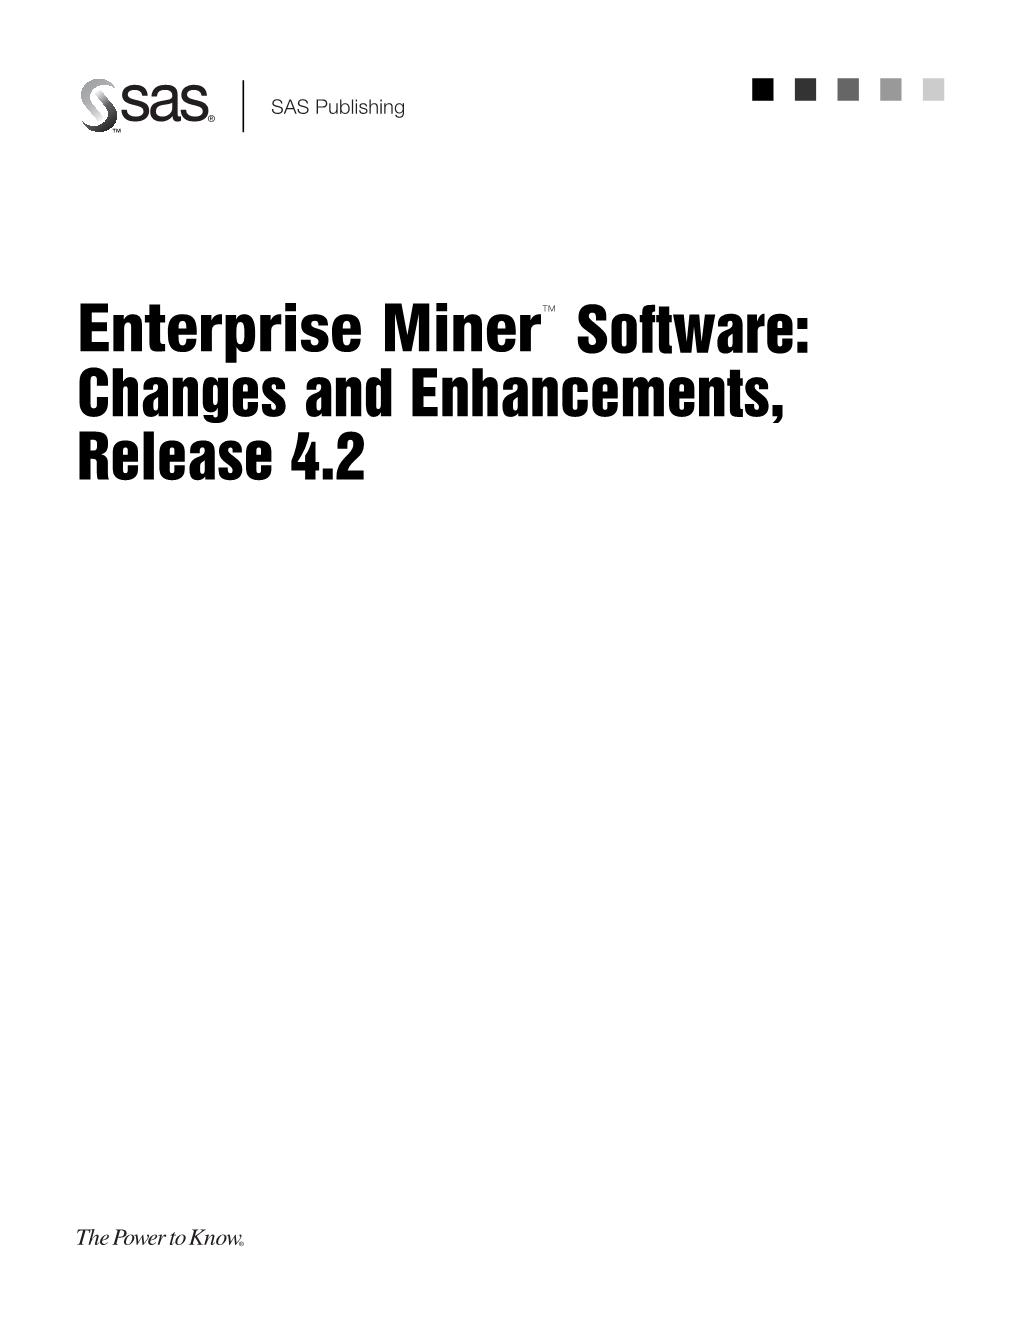 Enterprise Miner™ Software: Changes and Enhancements, Release 4.2